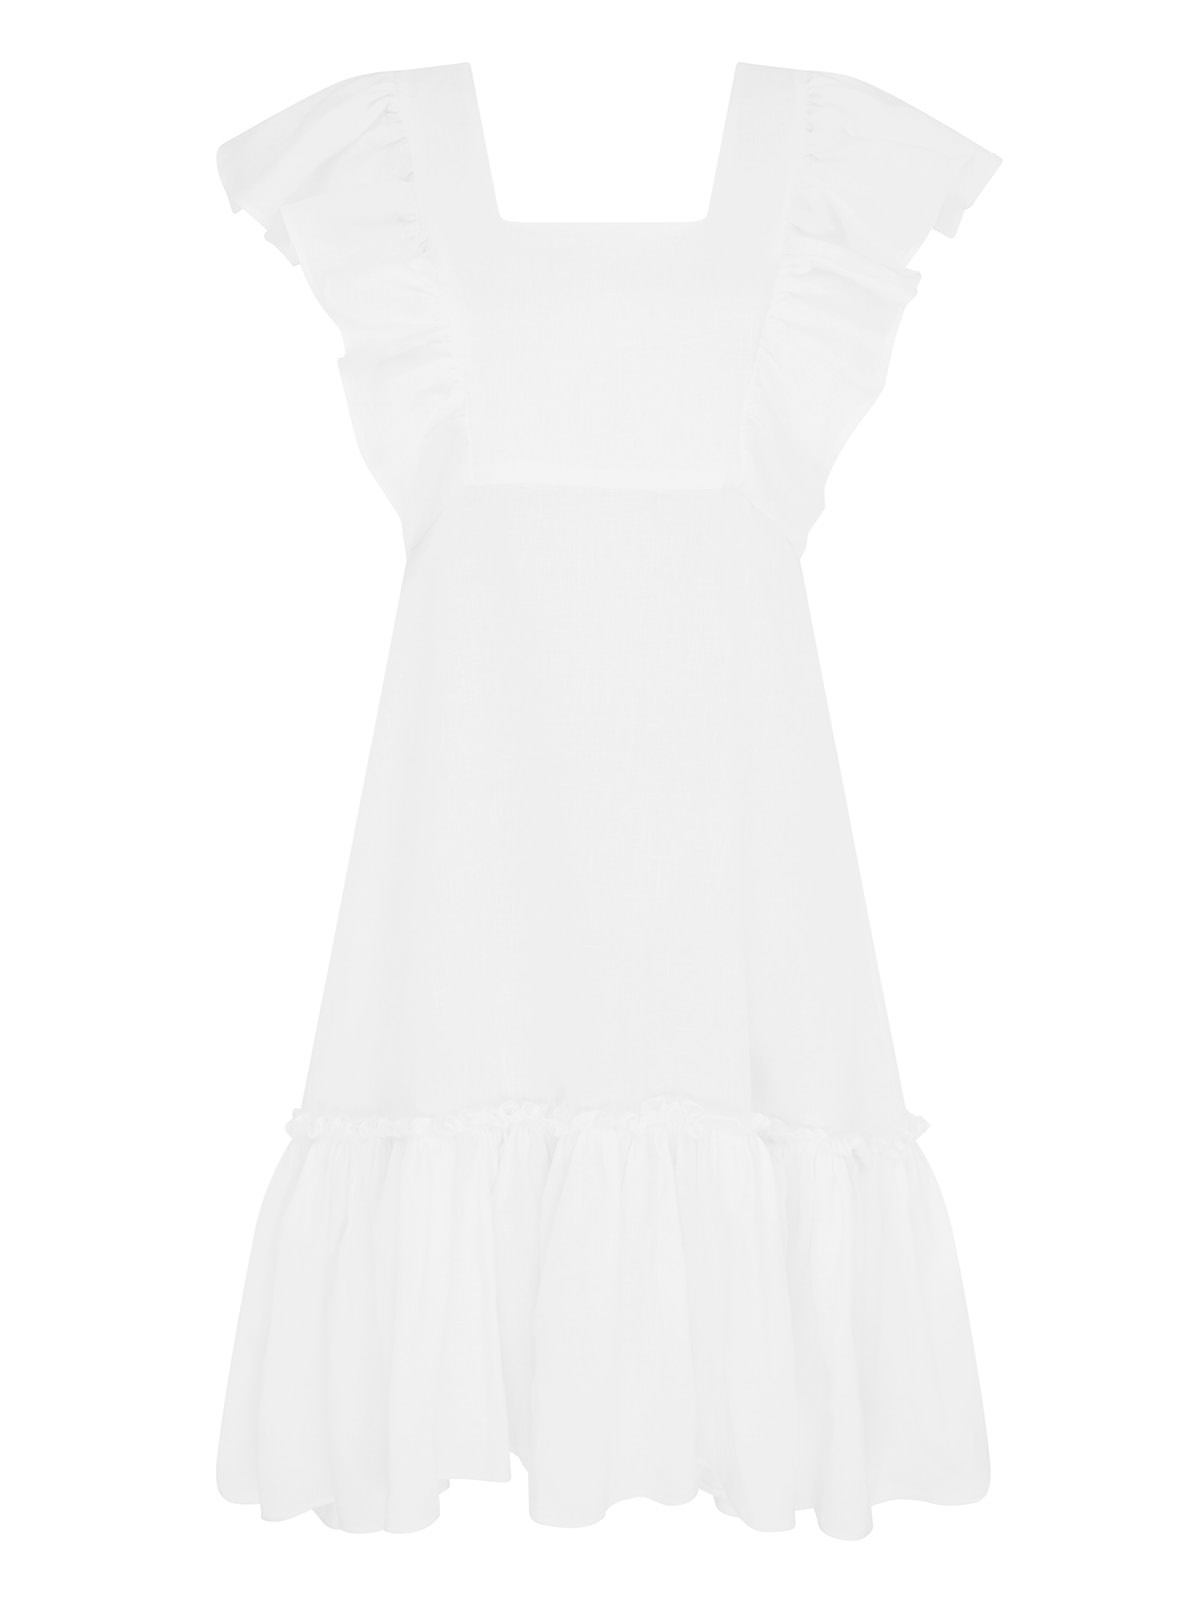 La la Lady Peggy Lipton Short Dress in White - Lisa The Label